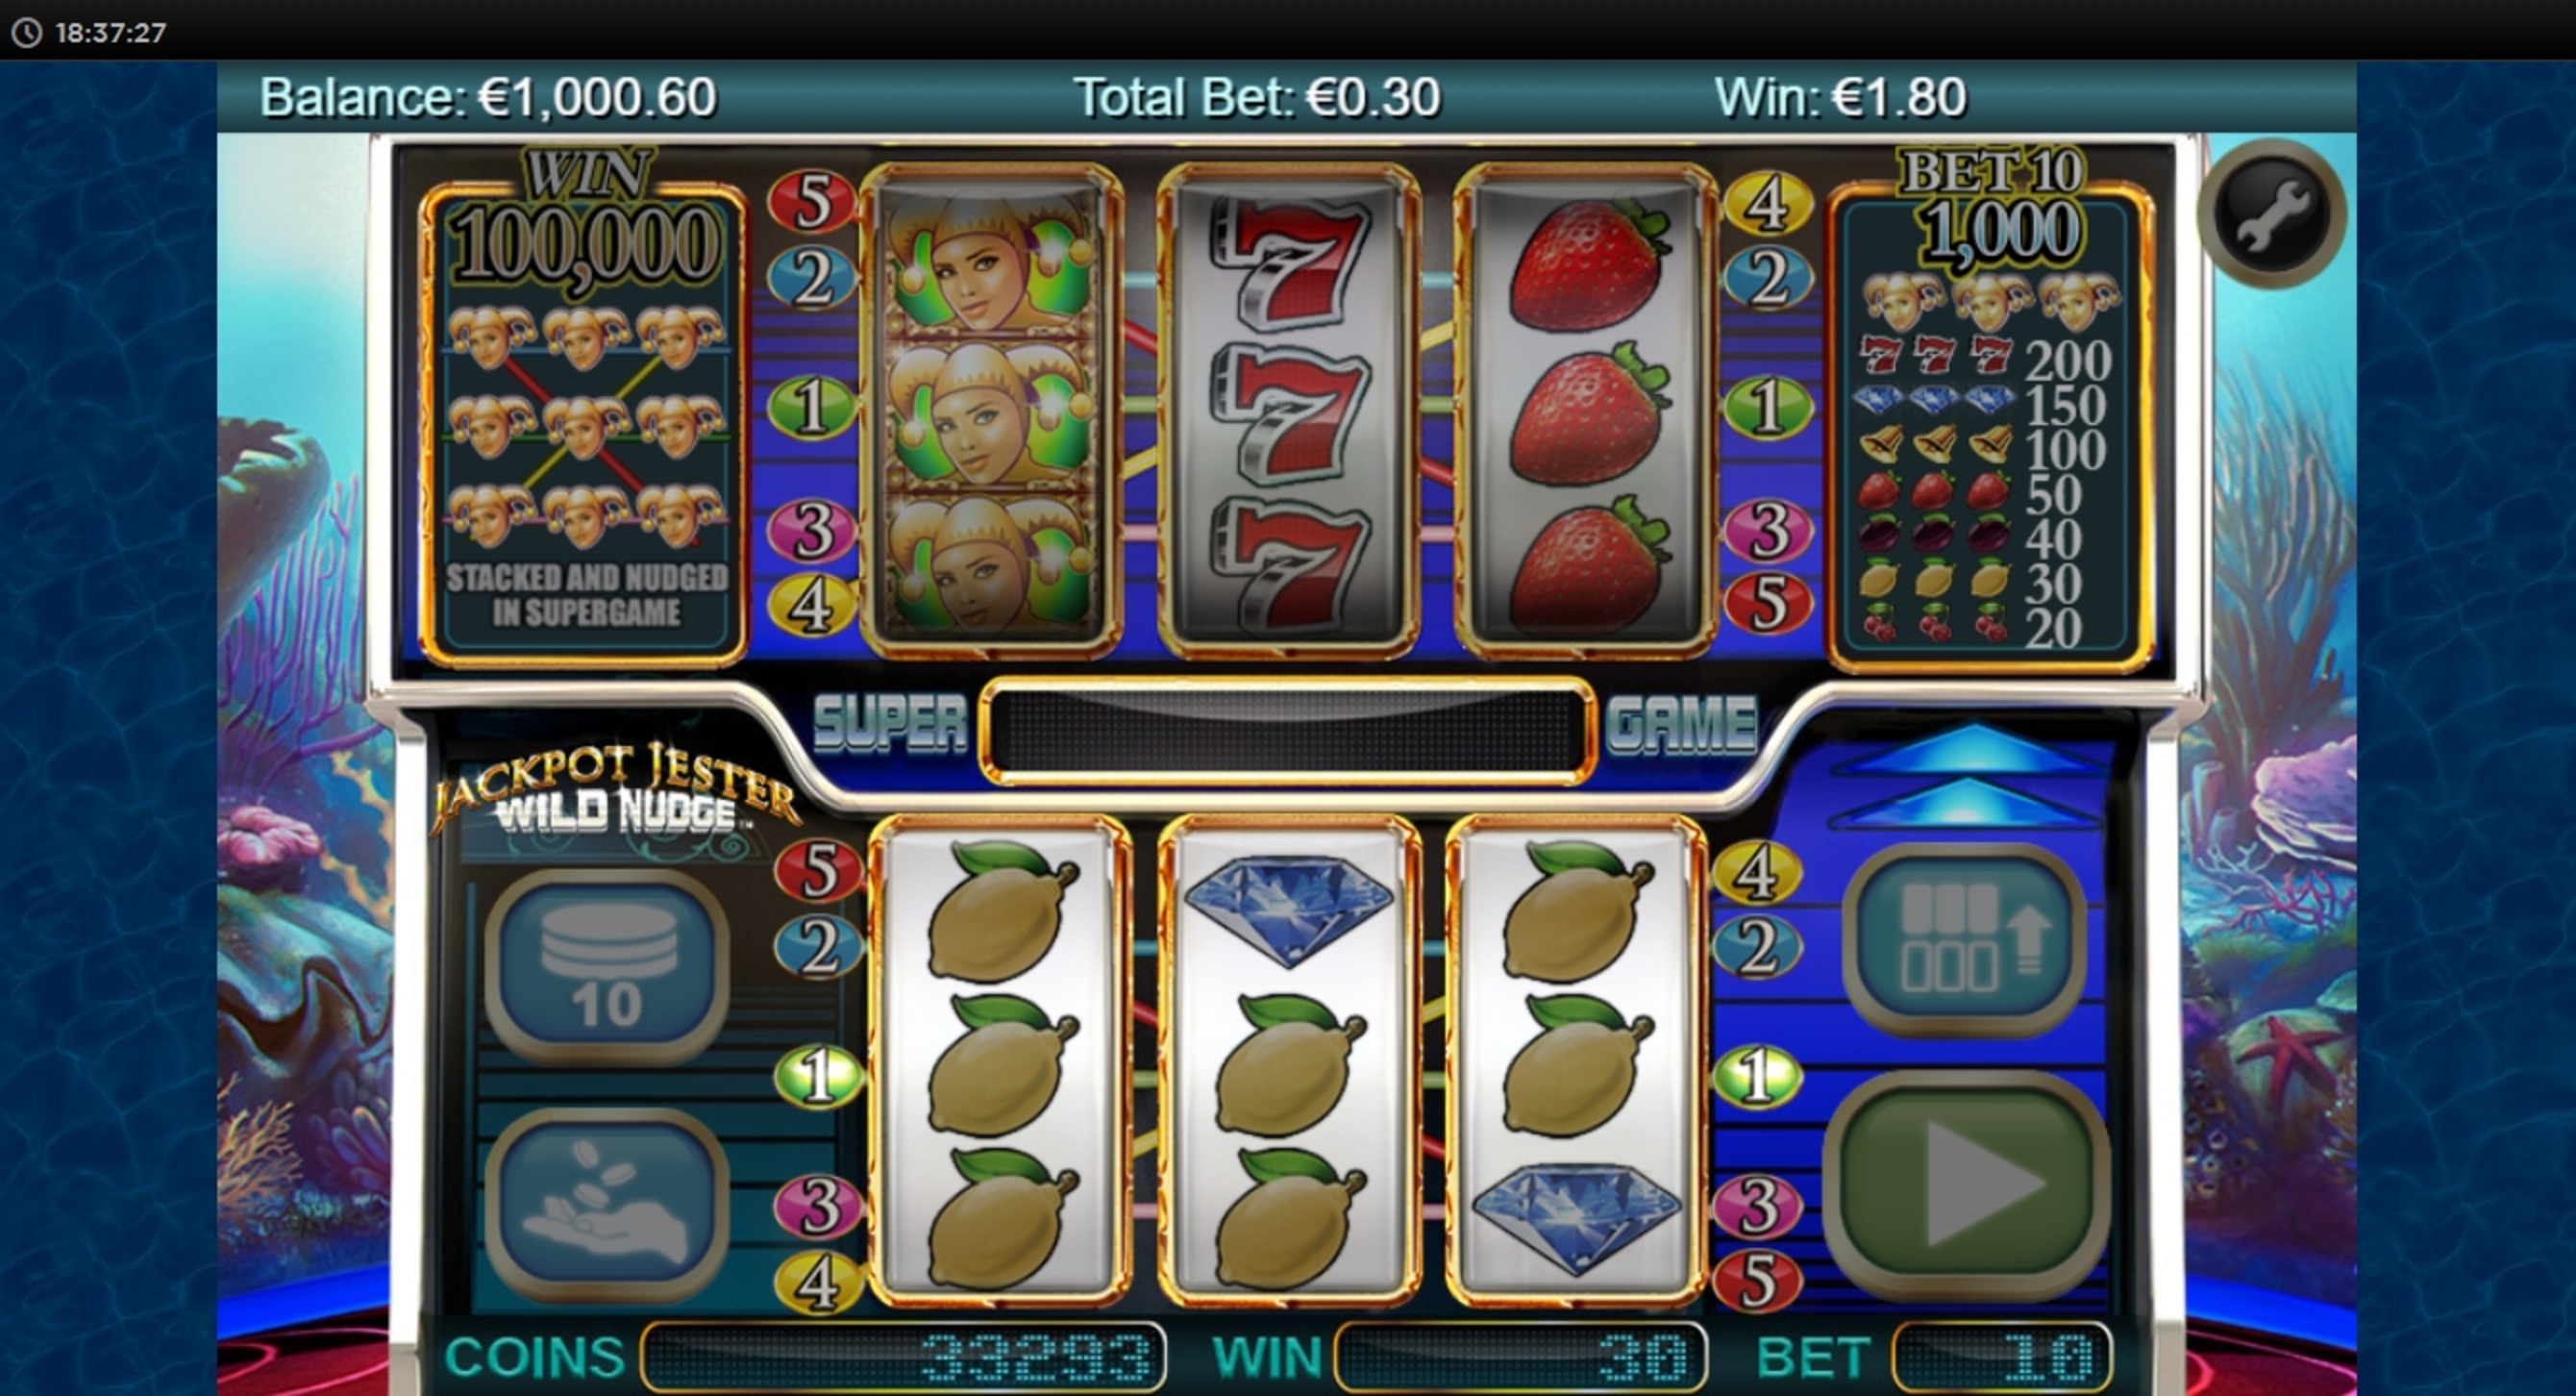 Win Money in Jackpot Jester Wild Nudge Free Slot Game by NextGen Gaming